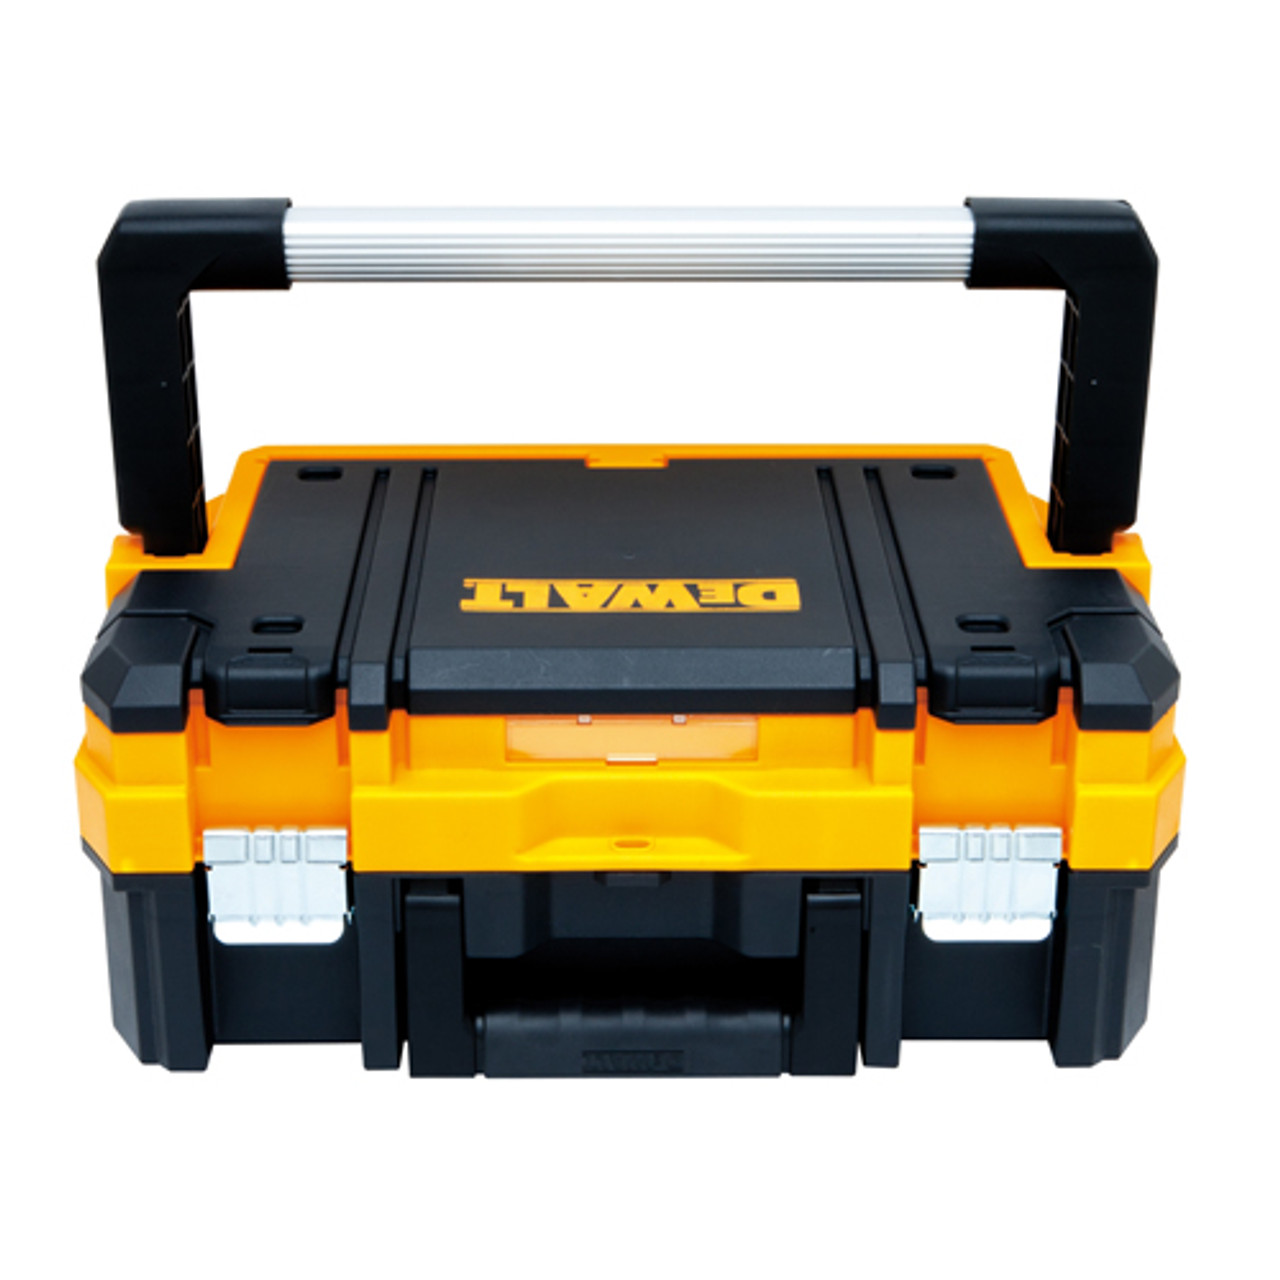 DEWALT DWST17824 - Heavy Duty Plastic Tool Box Type Tool Box